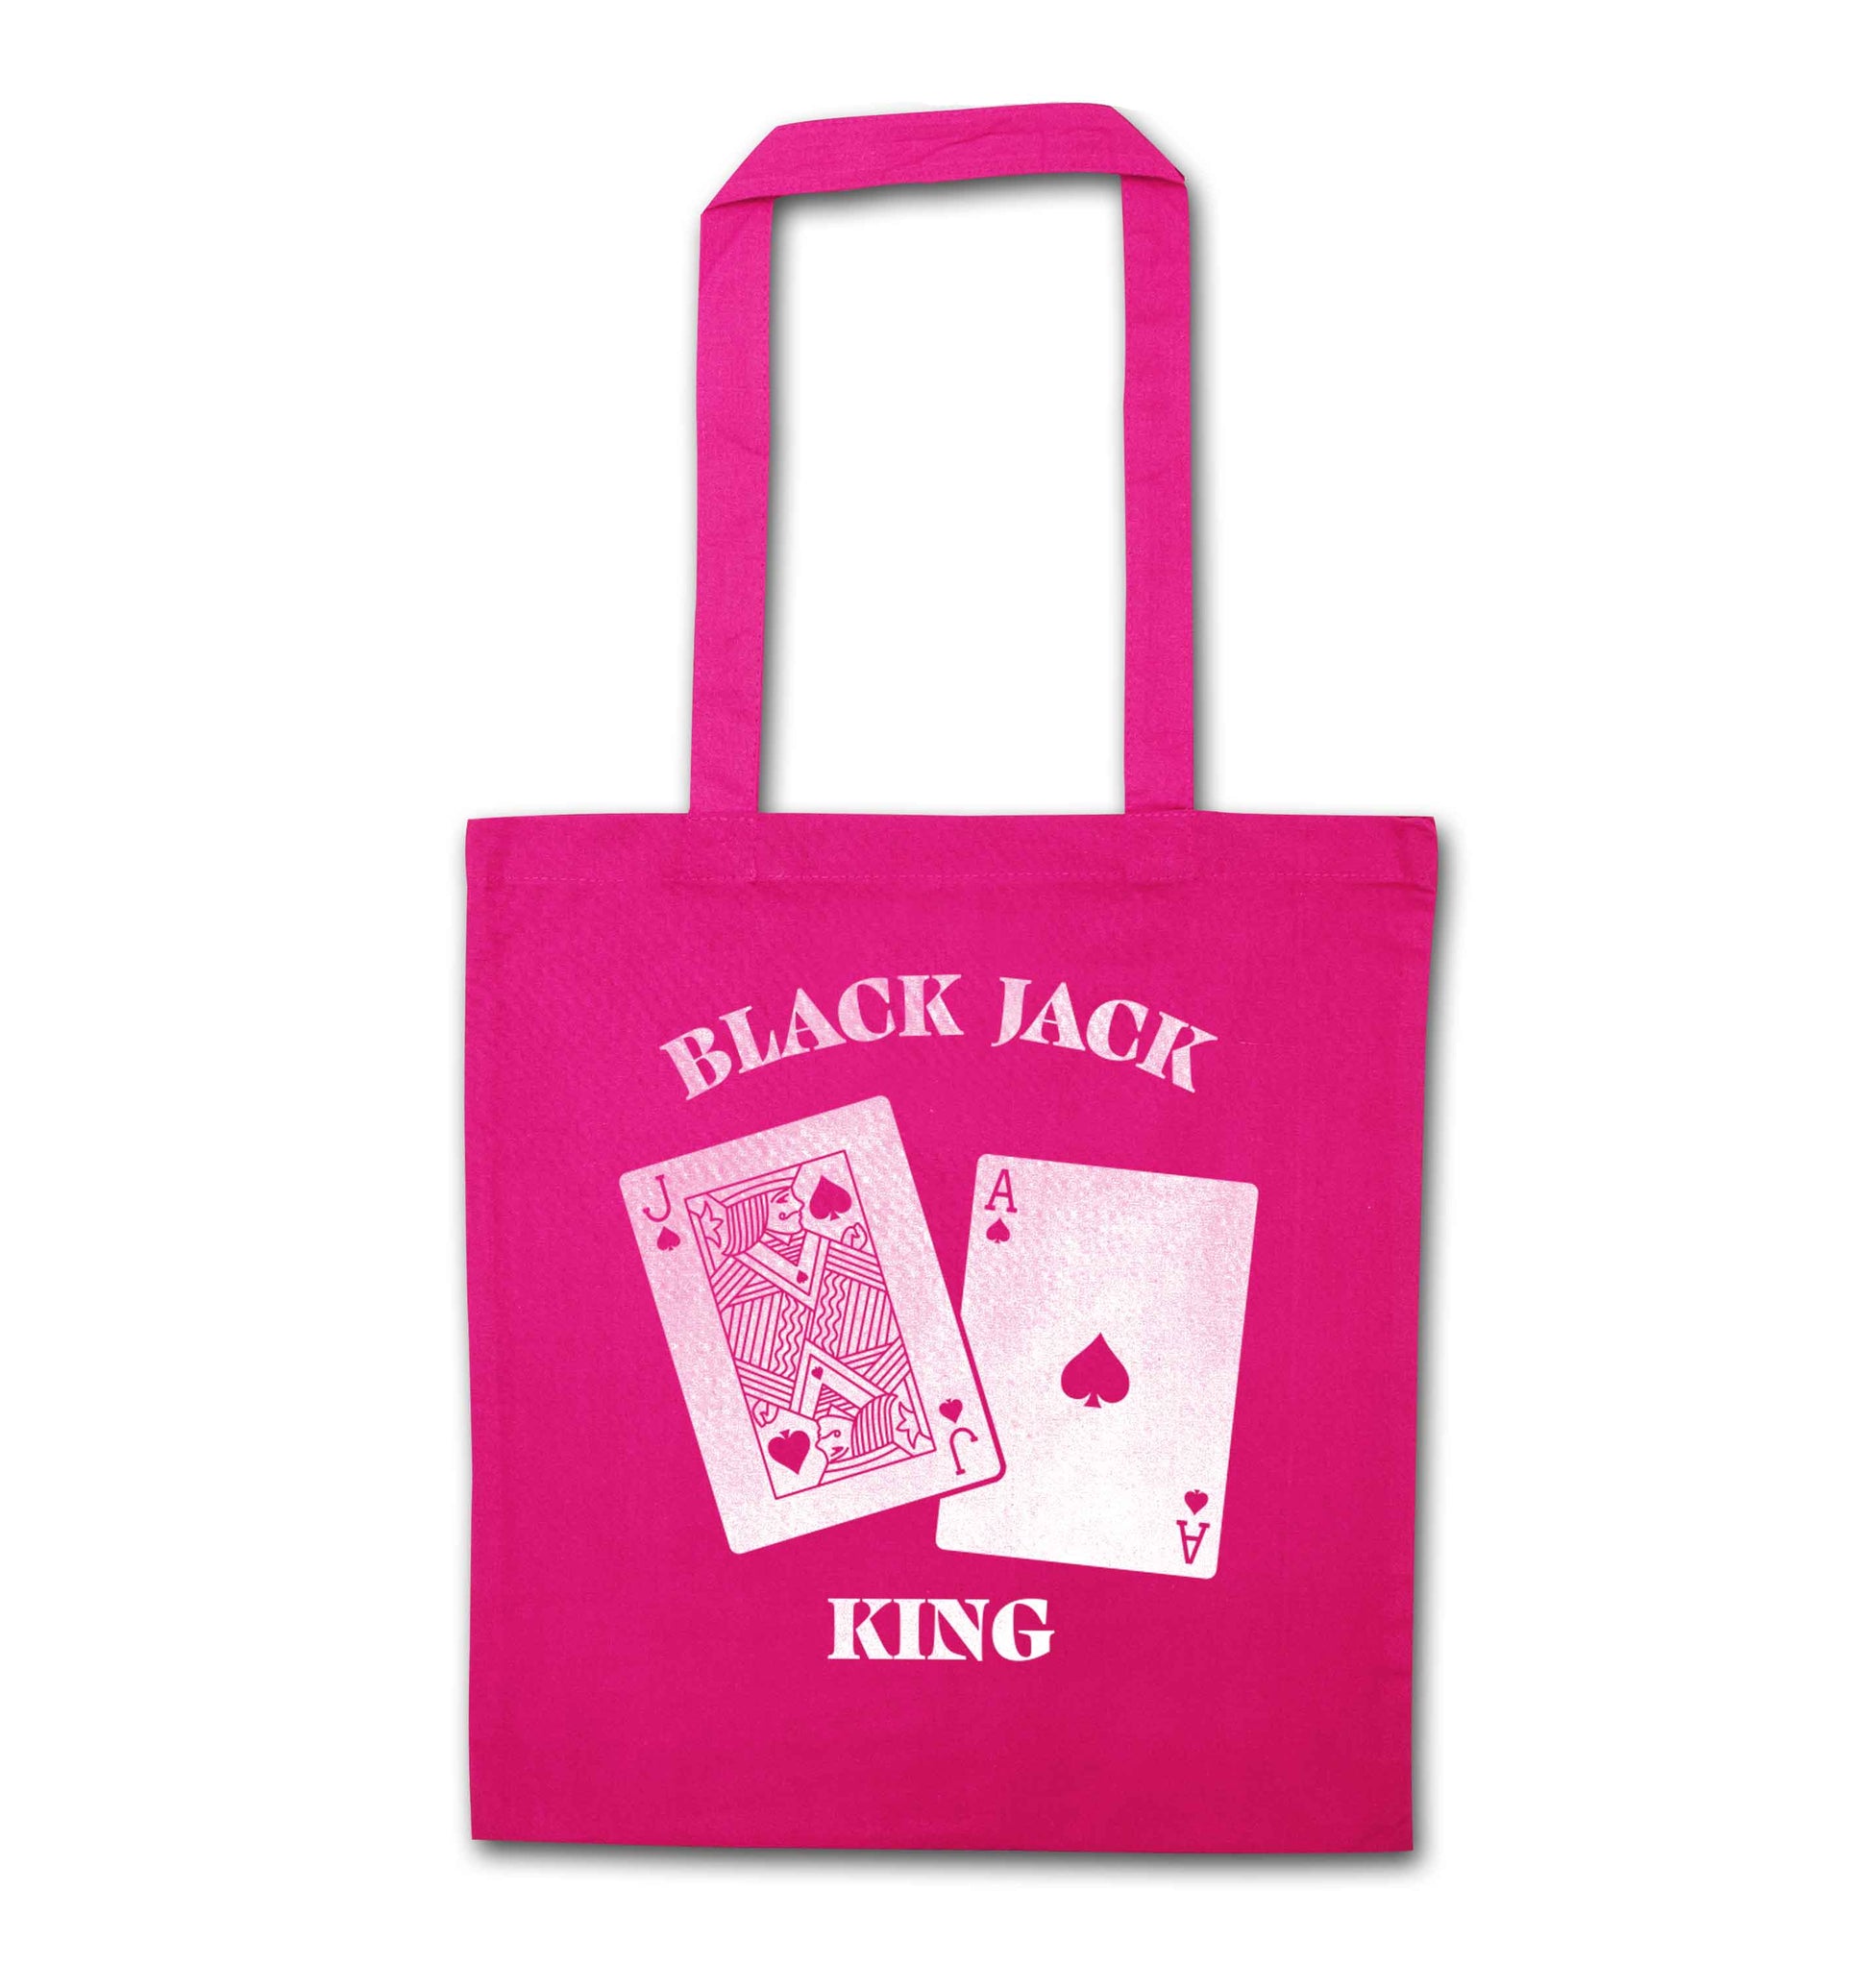 Blackjack king pink tote bag